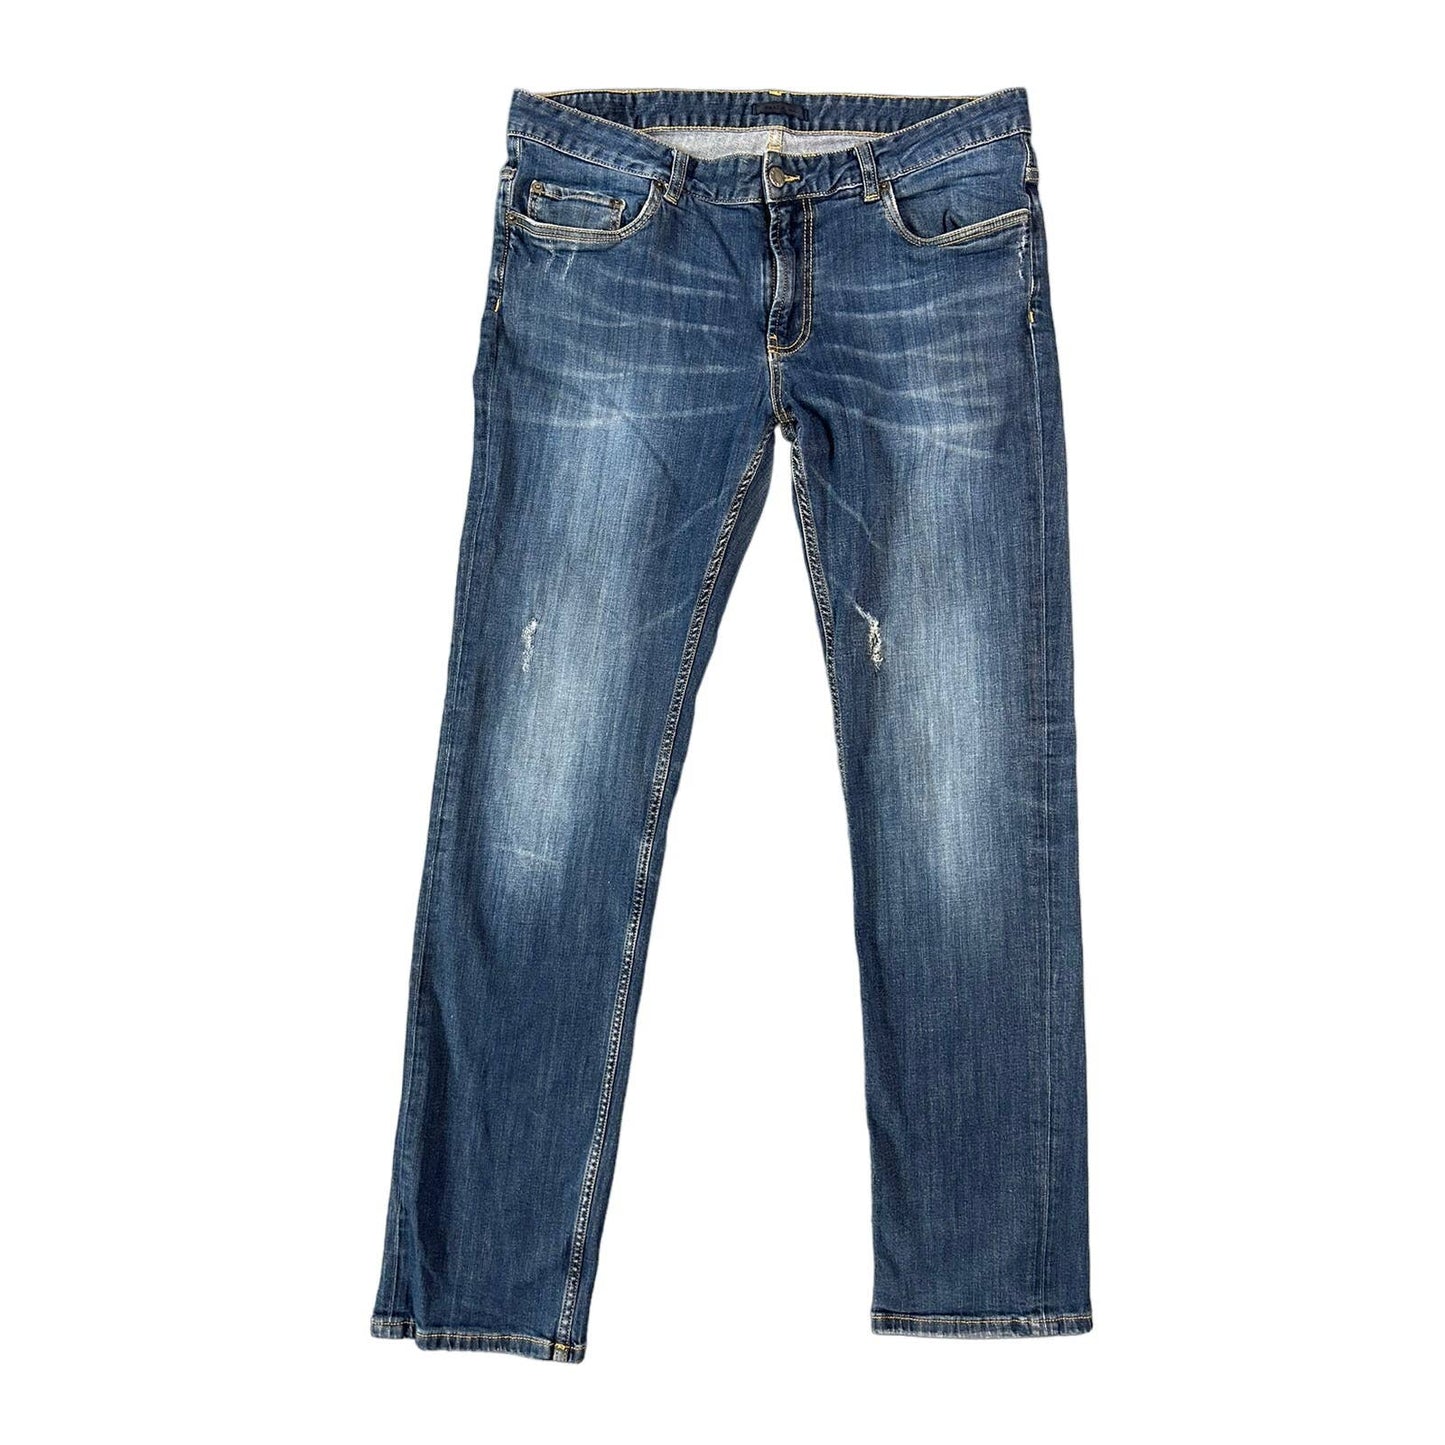 Prada jeans straight vintage denim pants